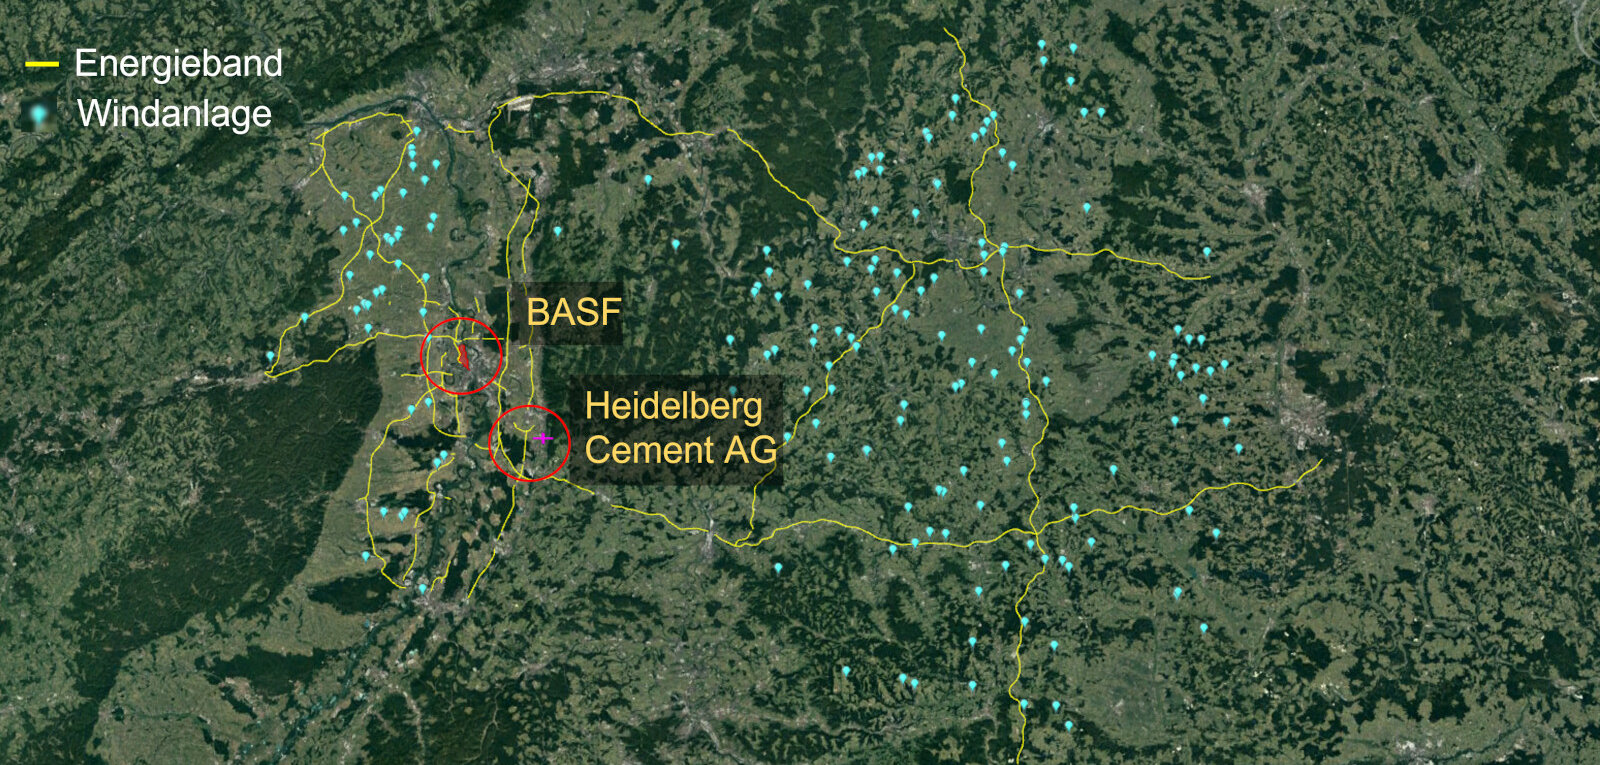 Google Earth - Stiftung Altes Neuland Frankfurt